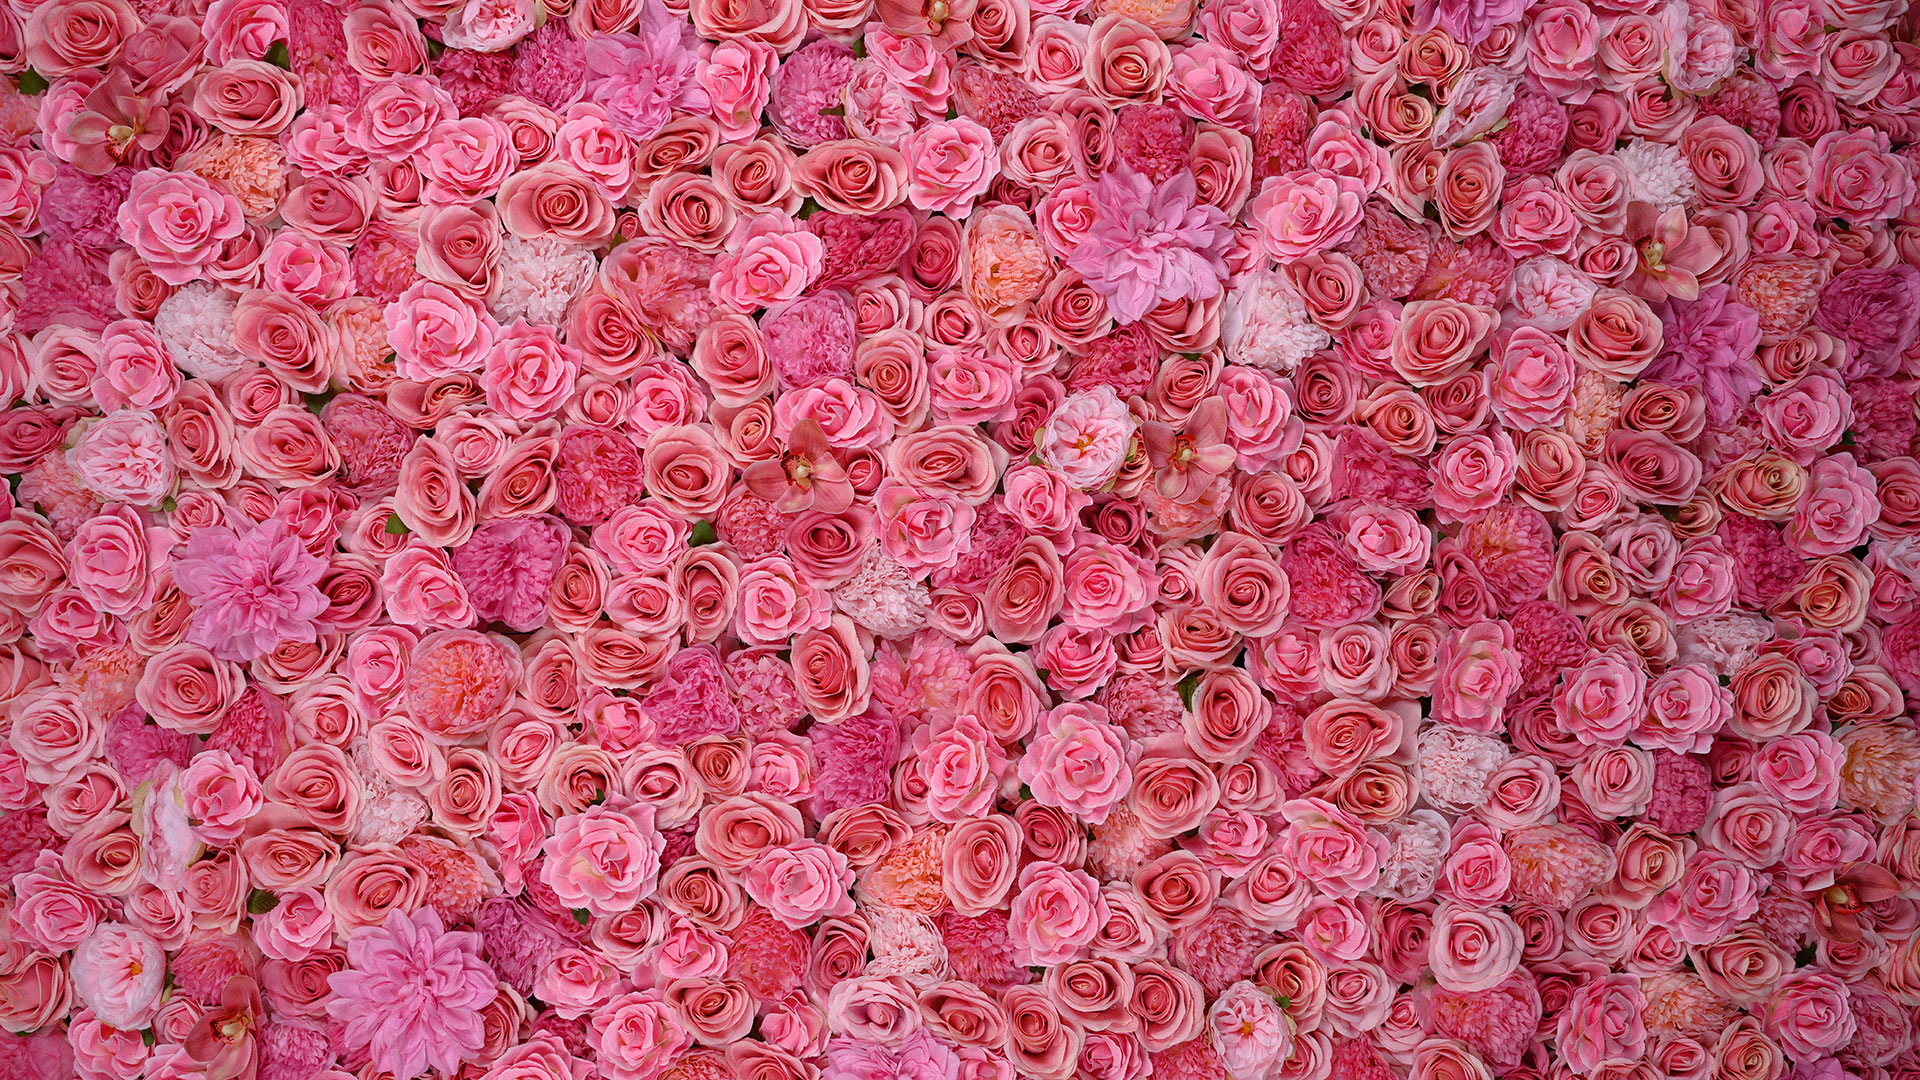 Rose Wall Texture - typikalempire